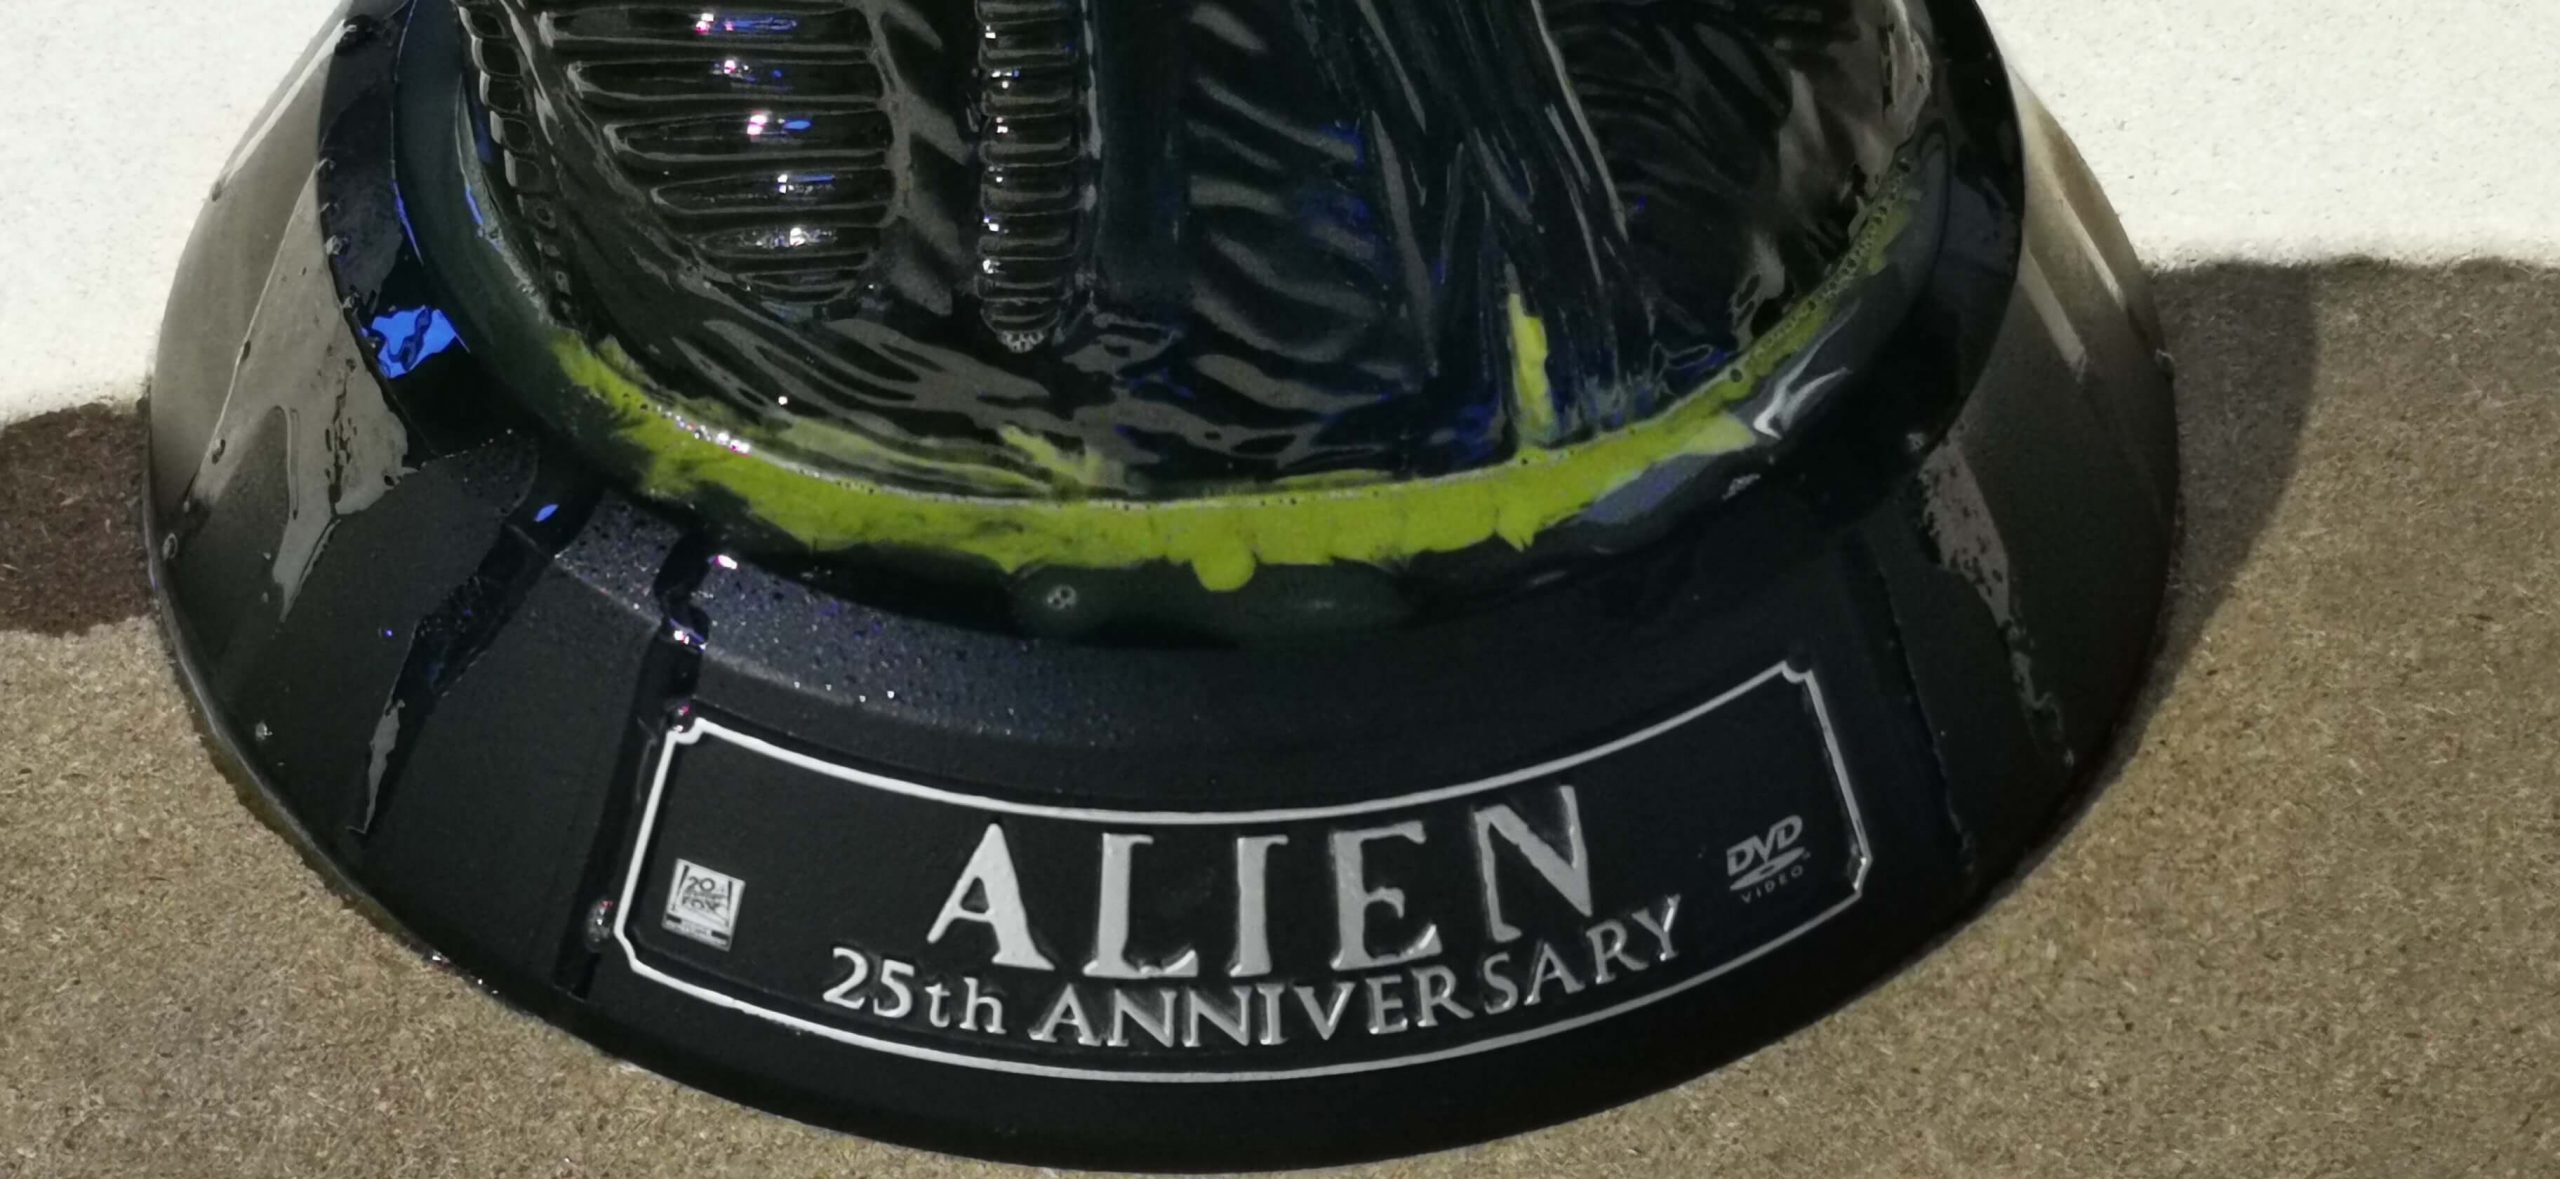 25th anniversary alient head